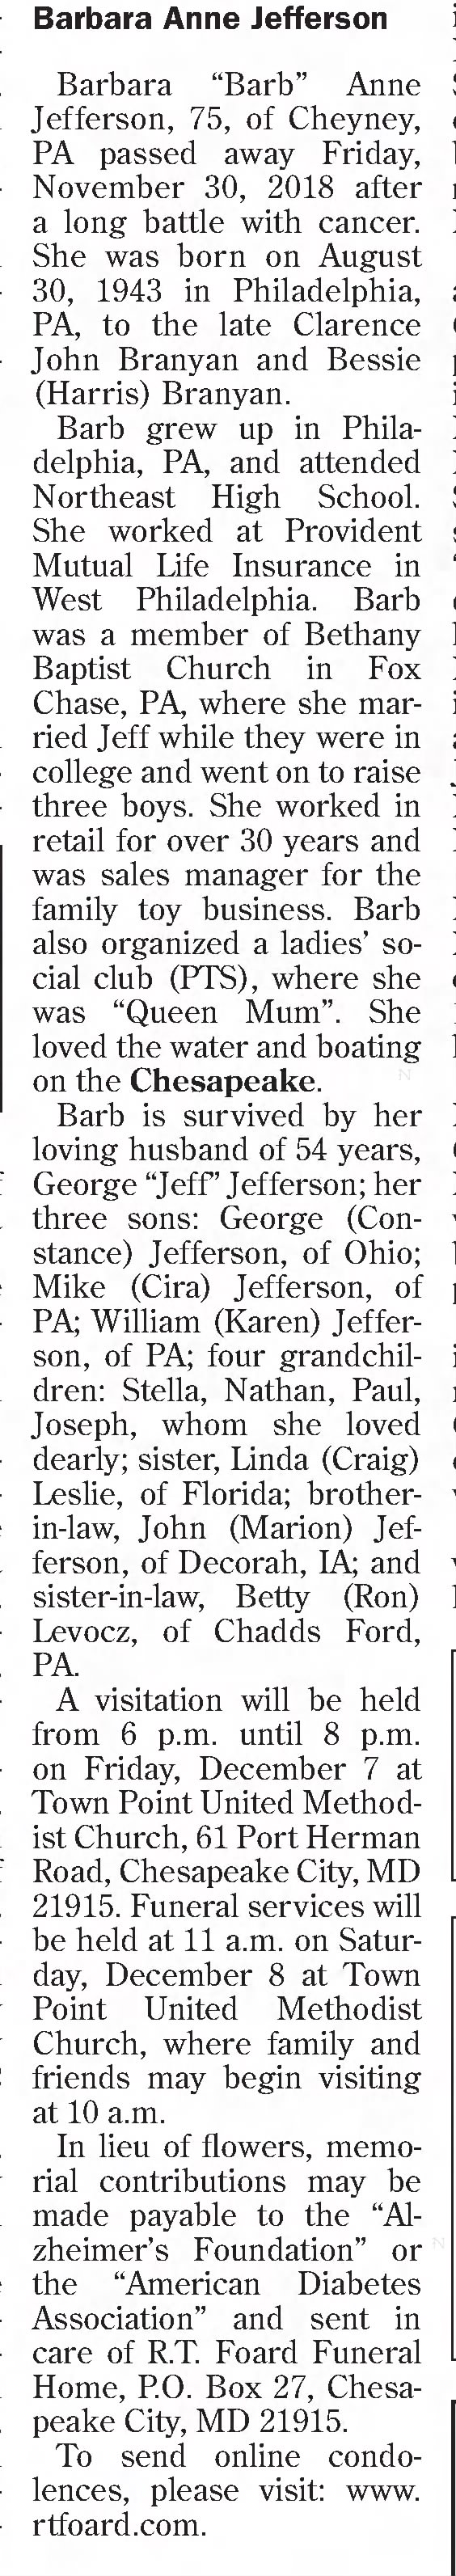 Obituary of Barbara Jefferson